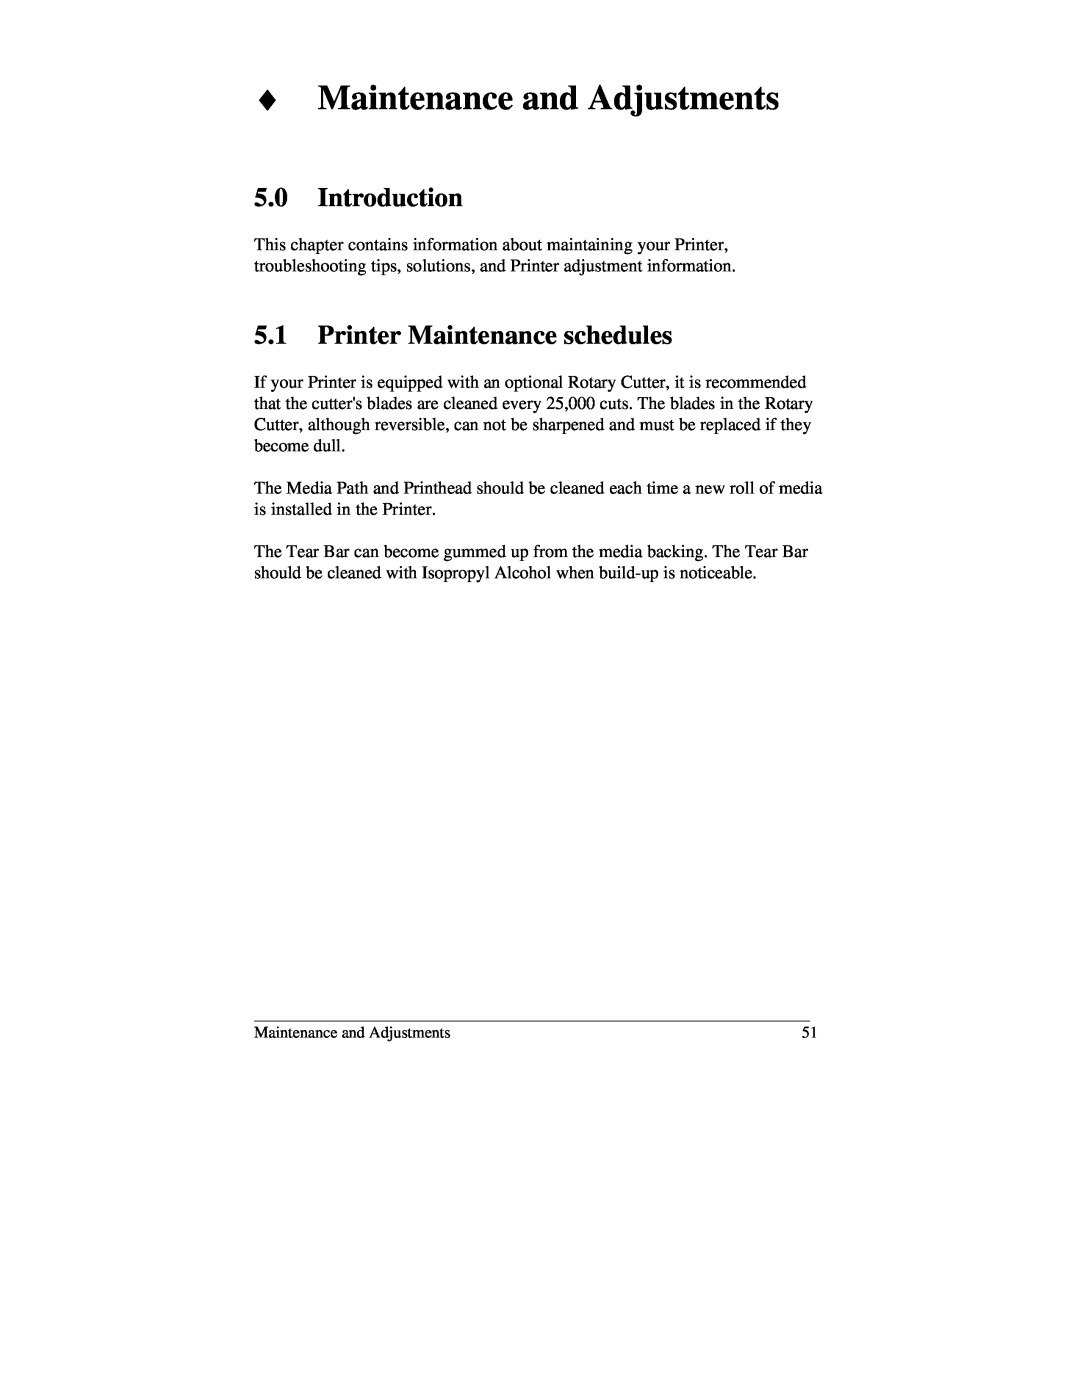 Brady 2034, 2024 manual Maintenance and Adjustments, Introduction, Printer Maintenance schedules 